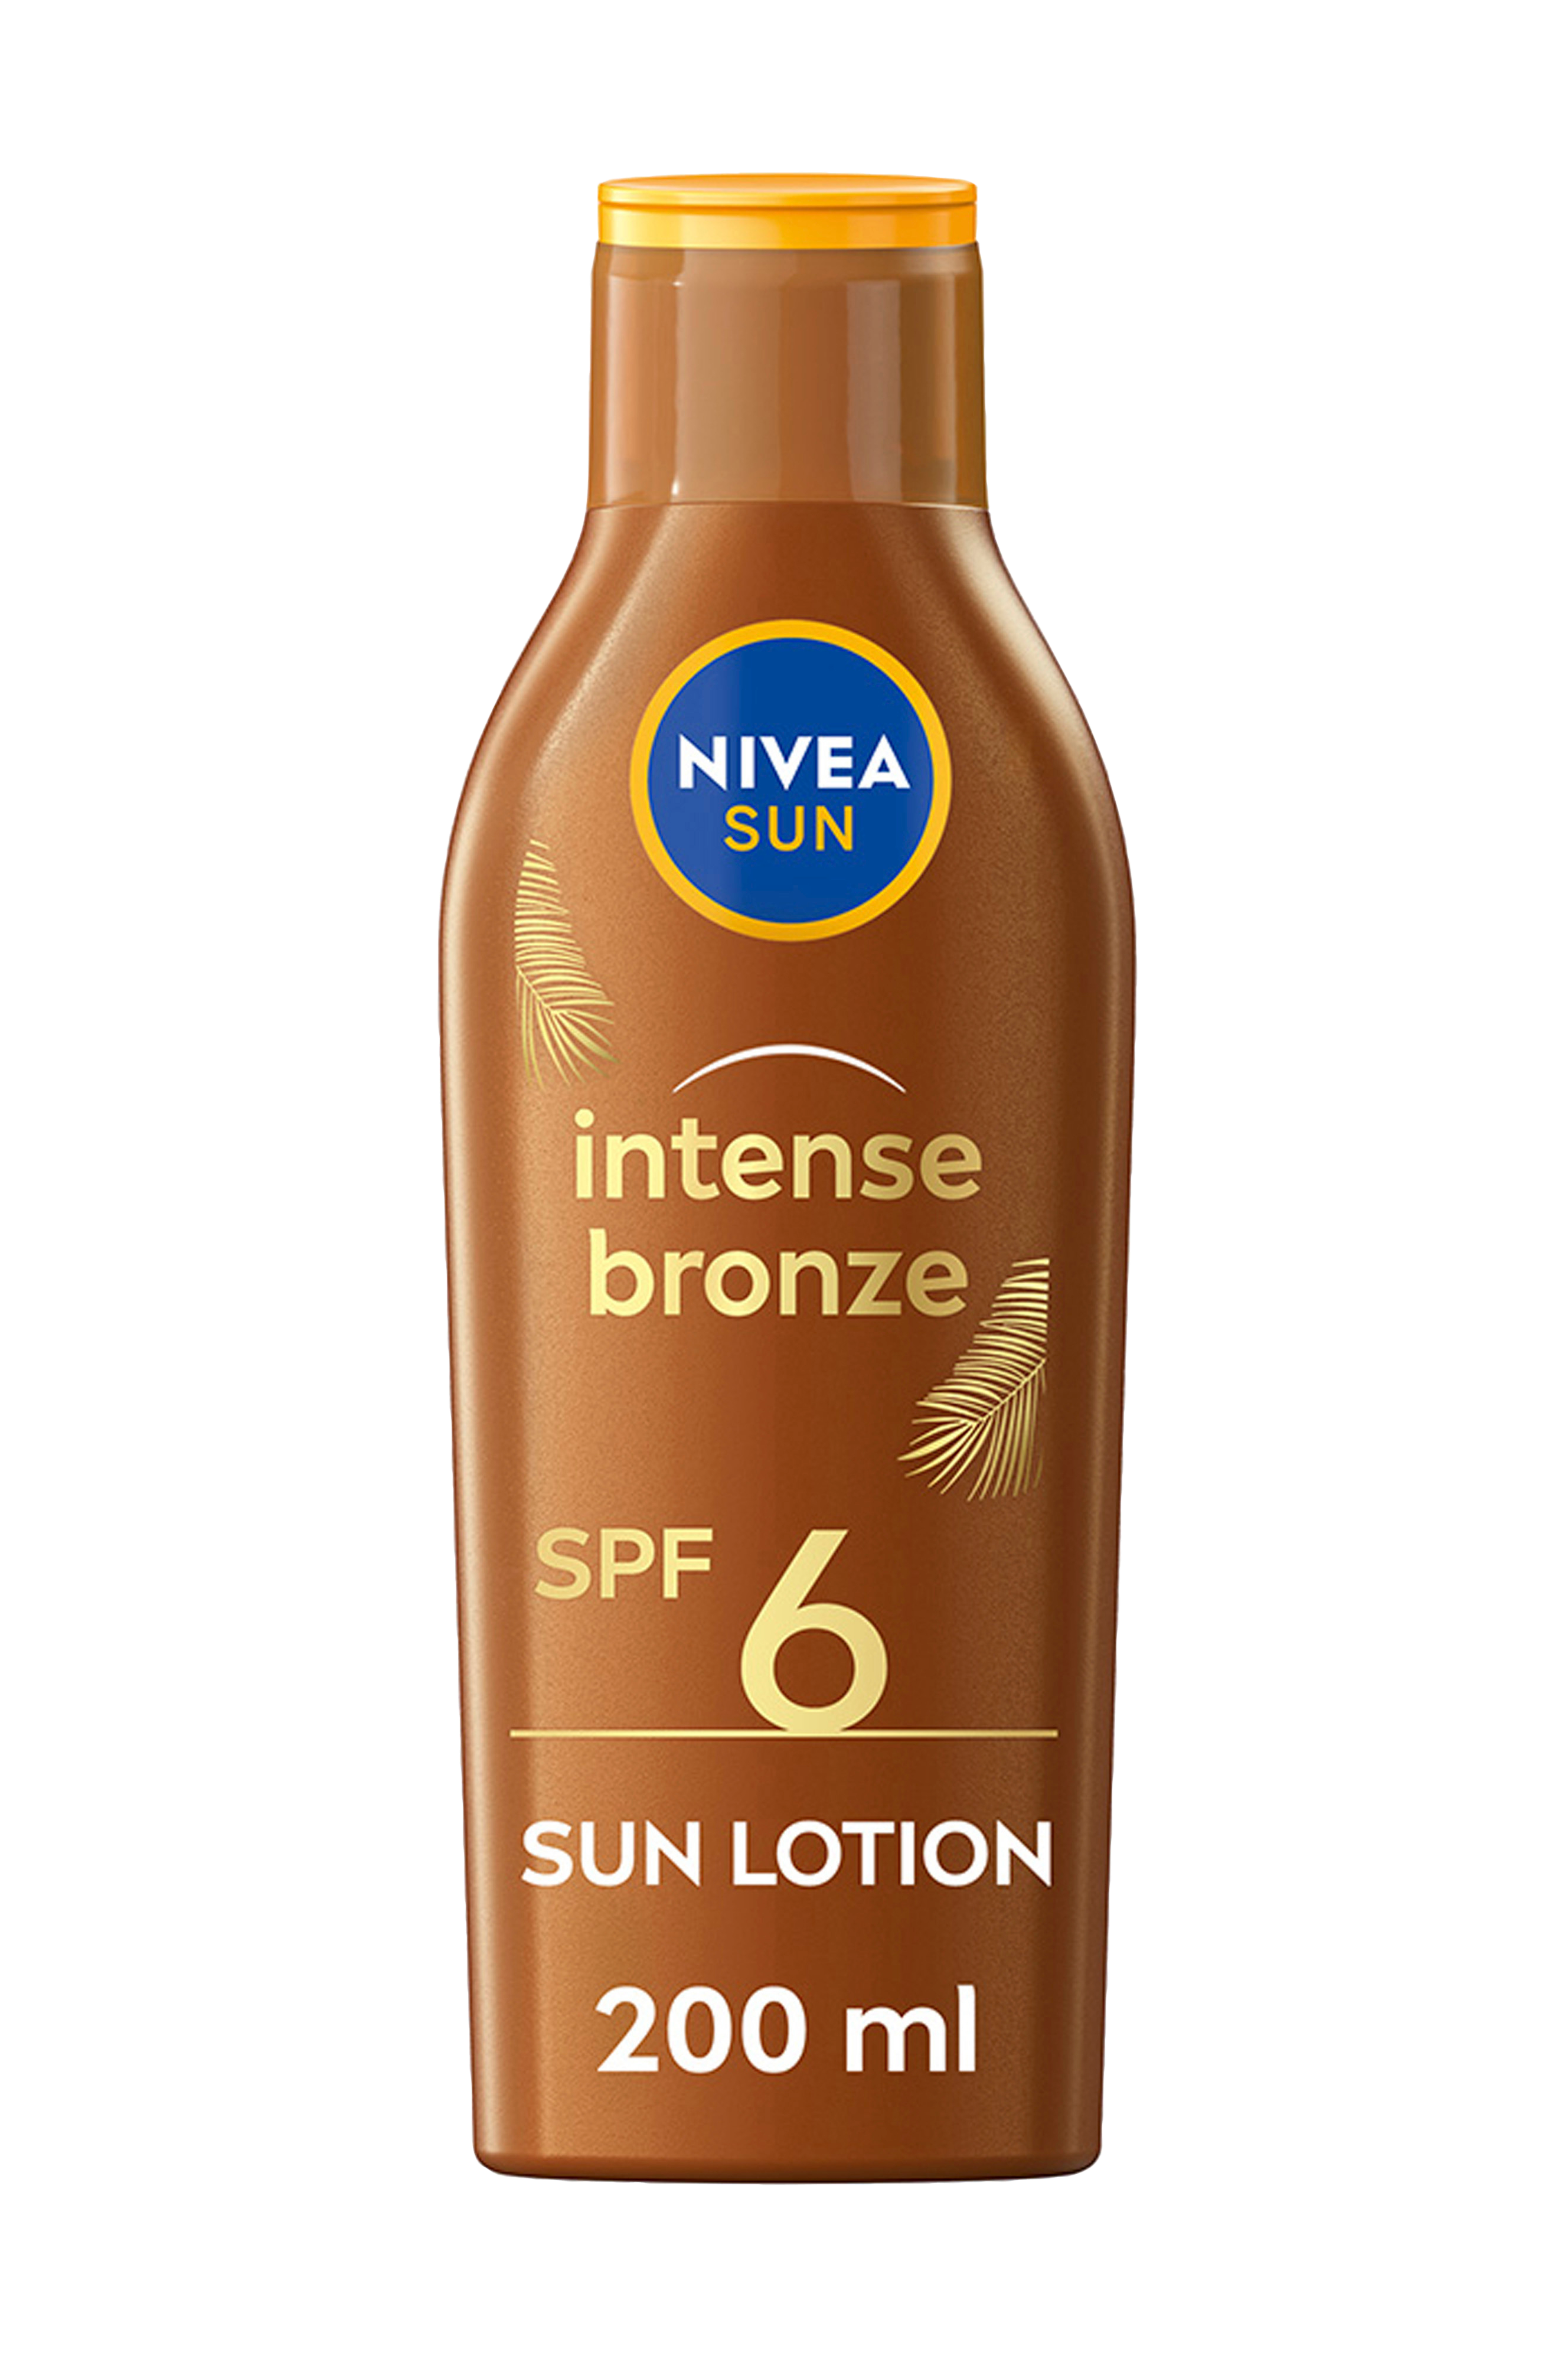 nedbrydes plukke Exert Nivea Intense Bronze Sun Lotion SPF 6 200 ml - Krop | Ellos.dk